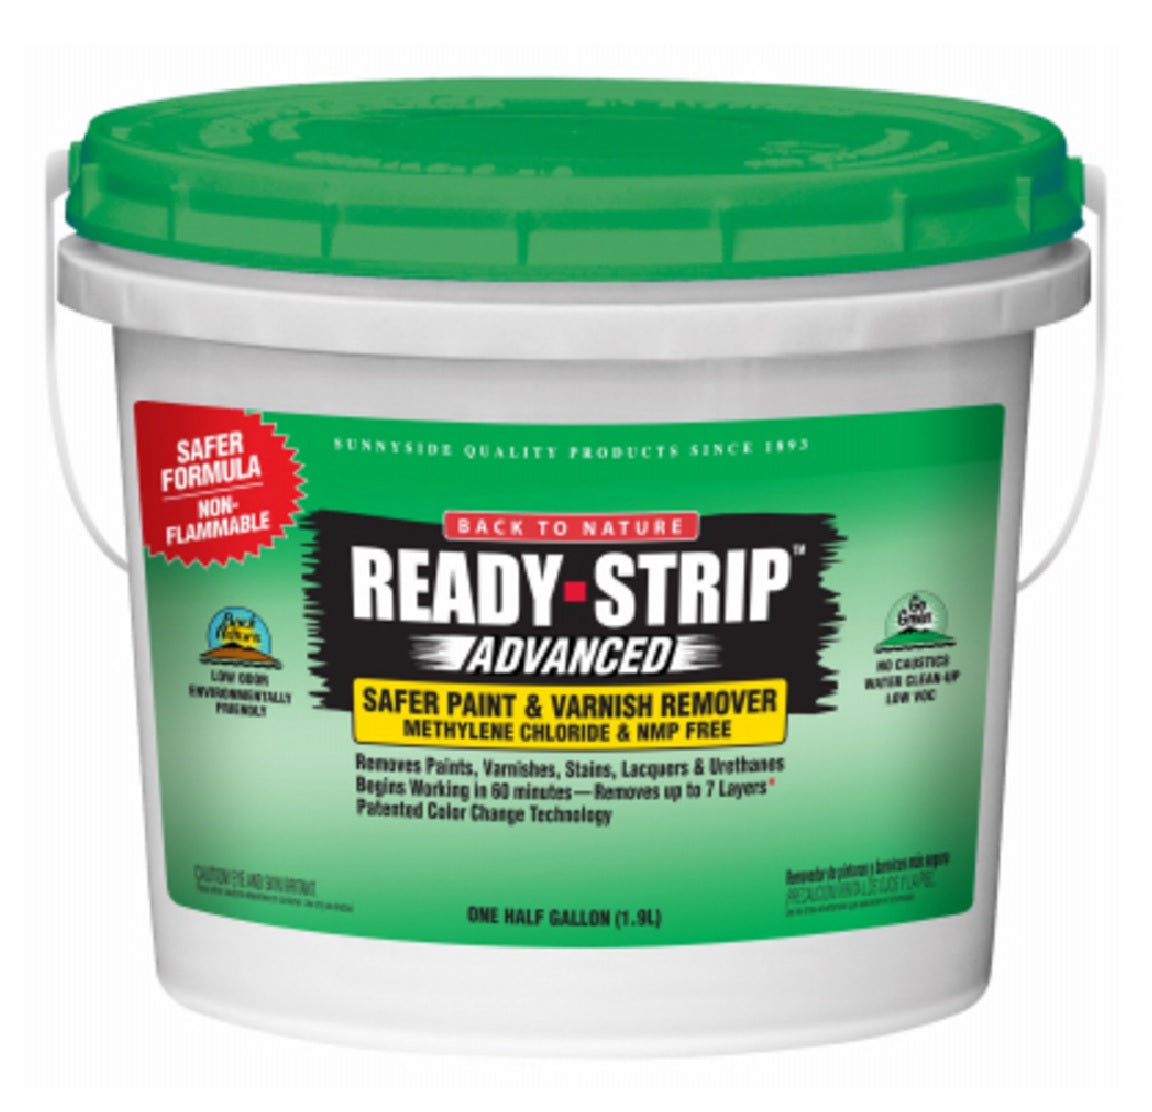 Sunnyside 65864A Ready Strip Advanced Paint & Varnish Remover, 1/2 Gallon